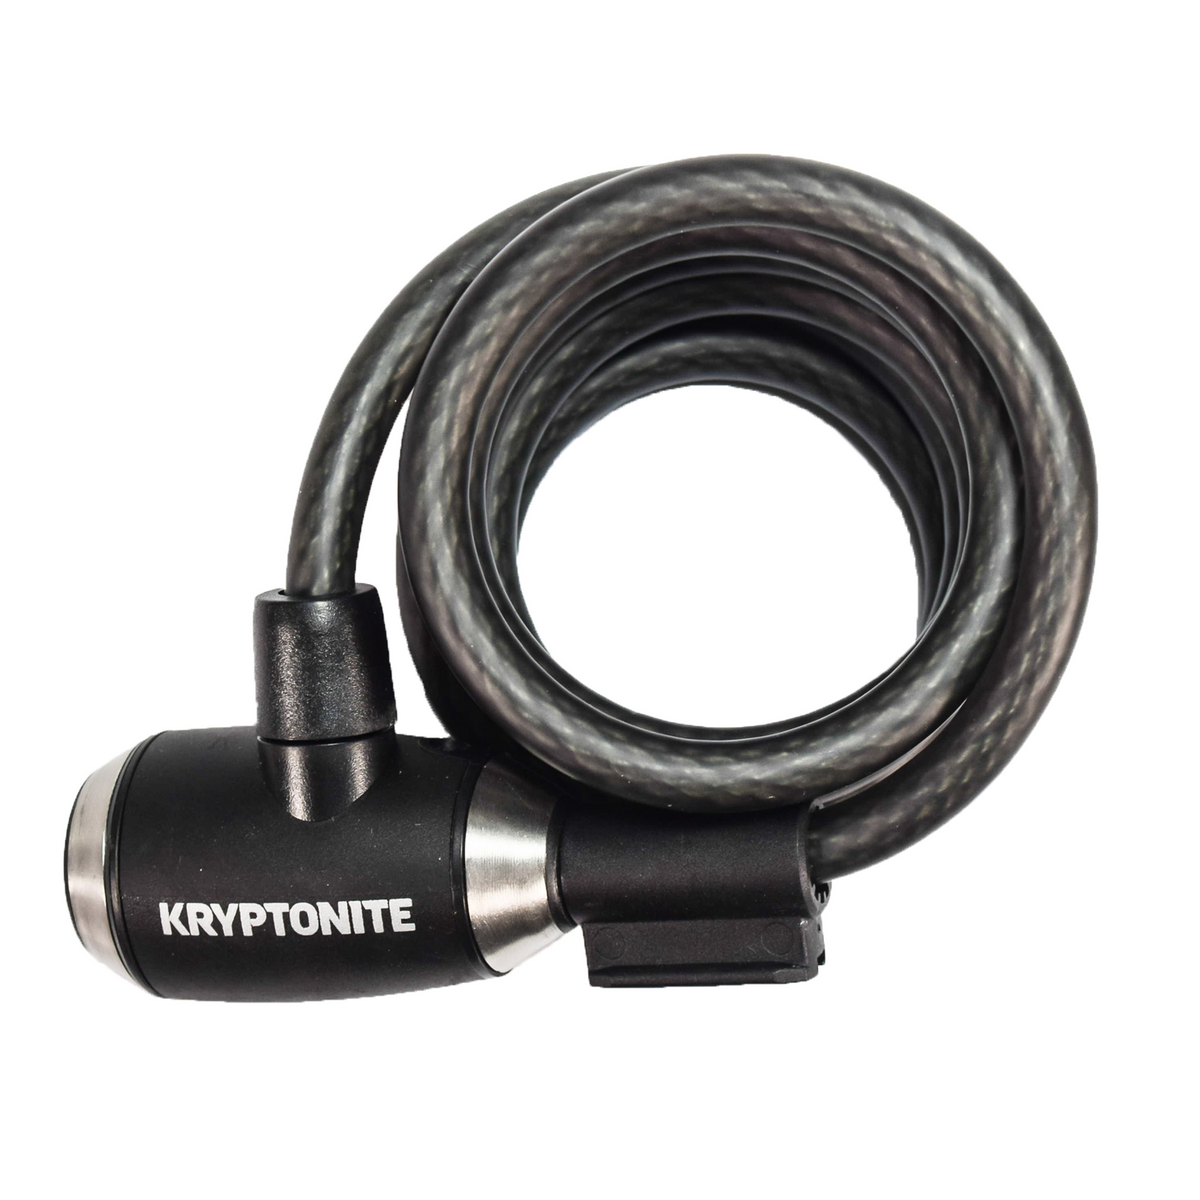 Kryptonite 5' KryptoFlex 1018 Key Cable  004950 Five Foot Cable Length